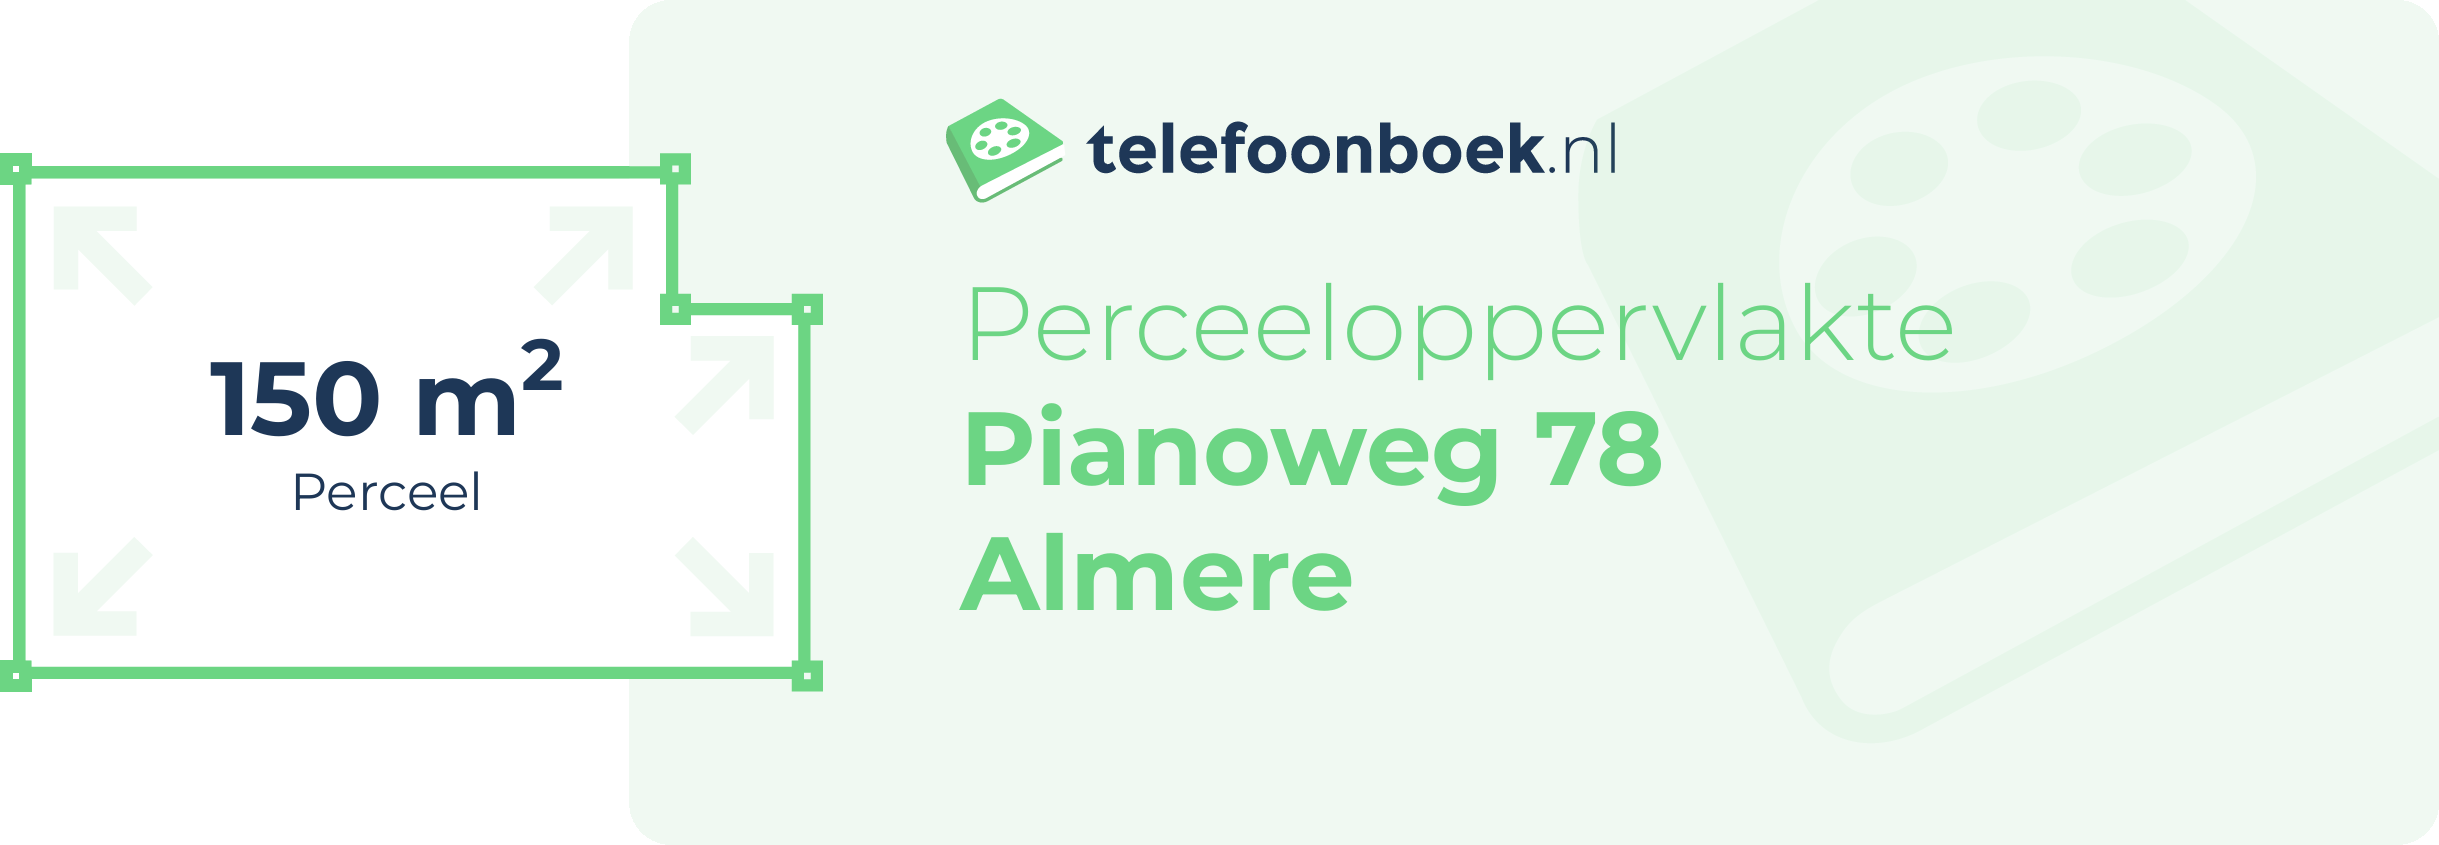 Perceeloppervlakte Pianoweg 78 Almere